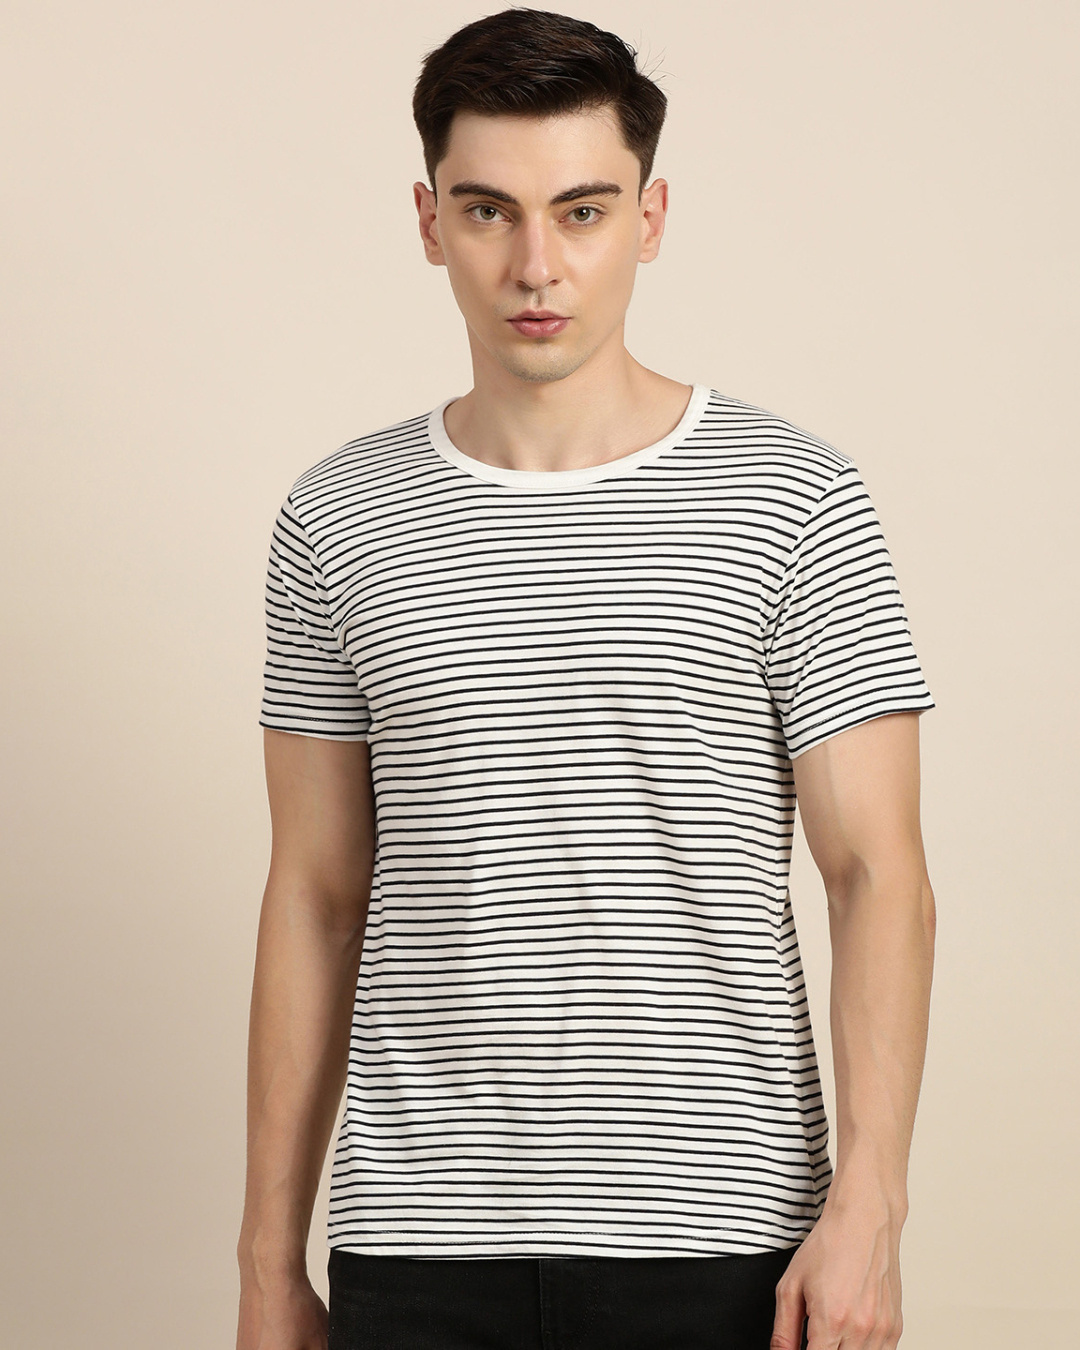 Buy Men's White Striped T-shirt Online at Bewakoof